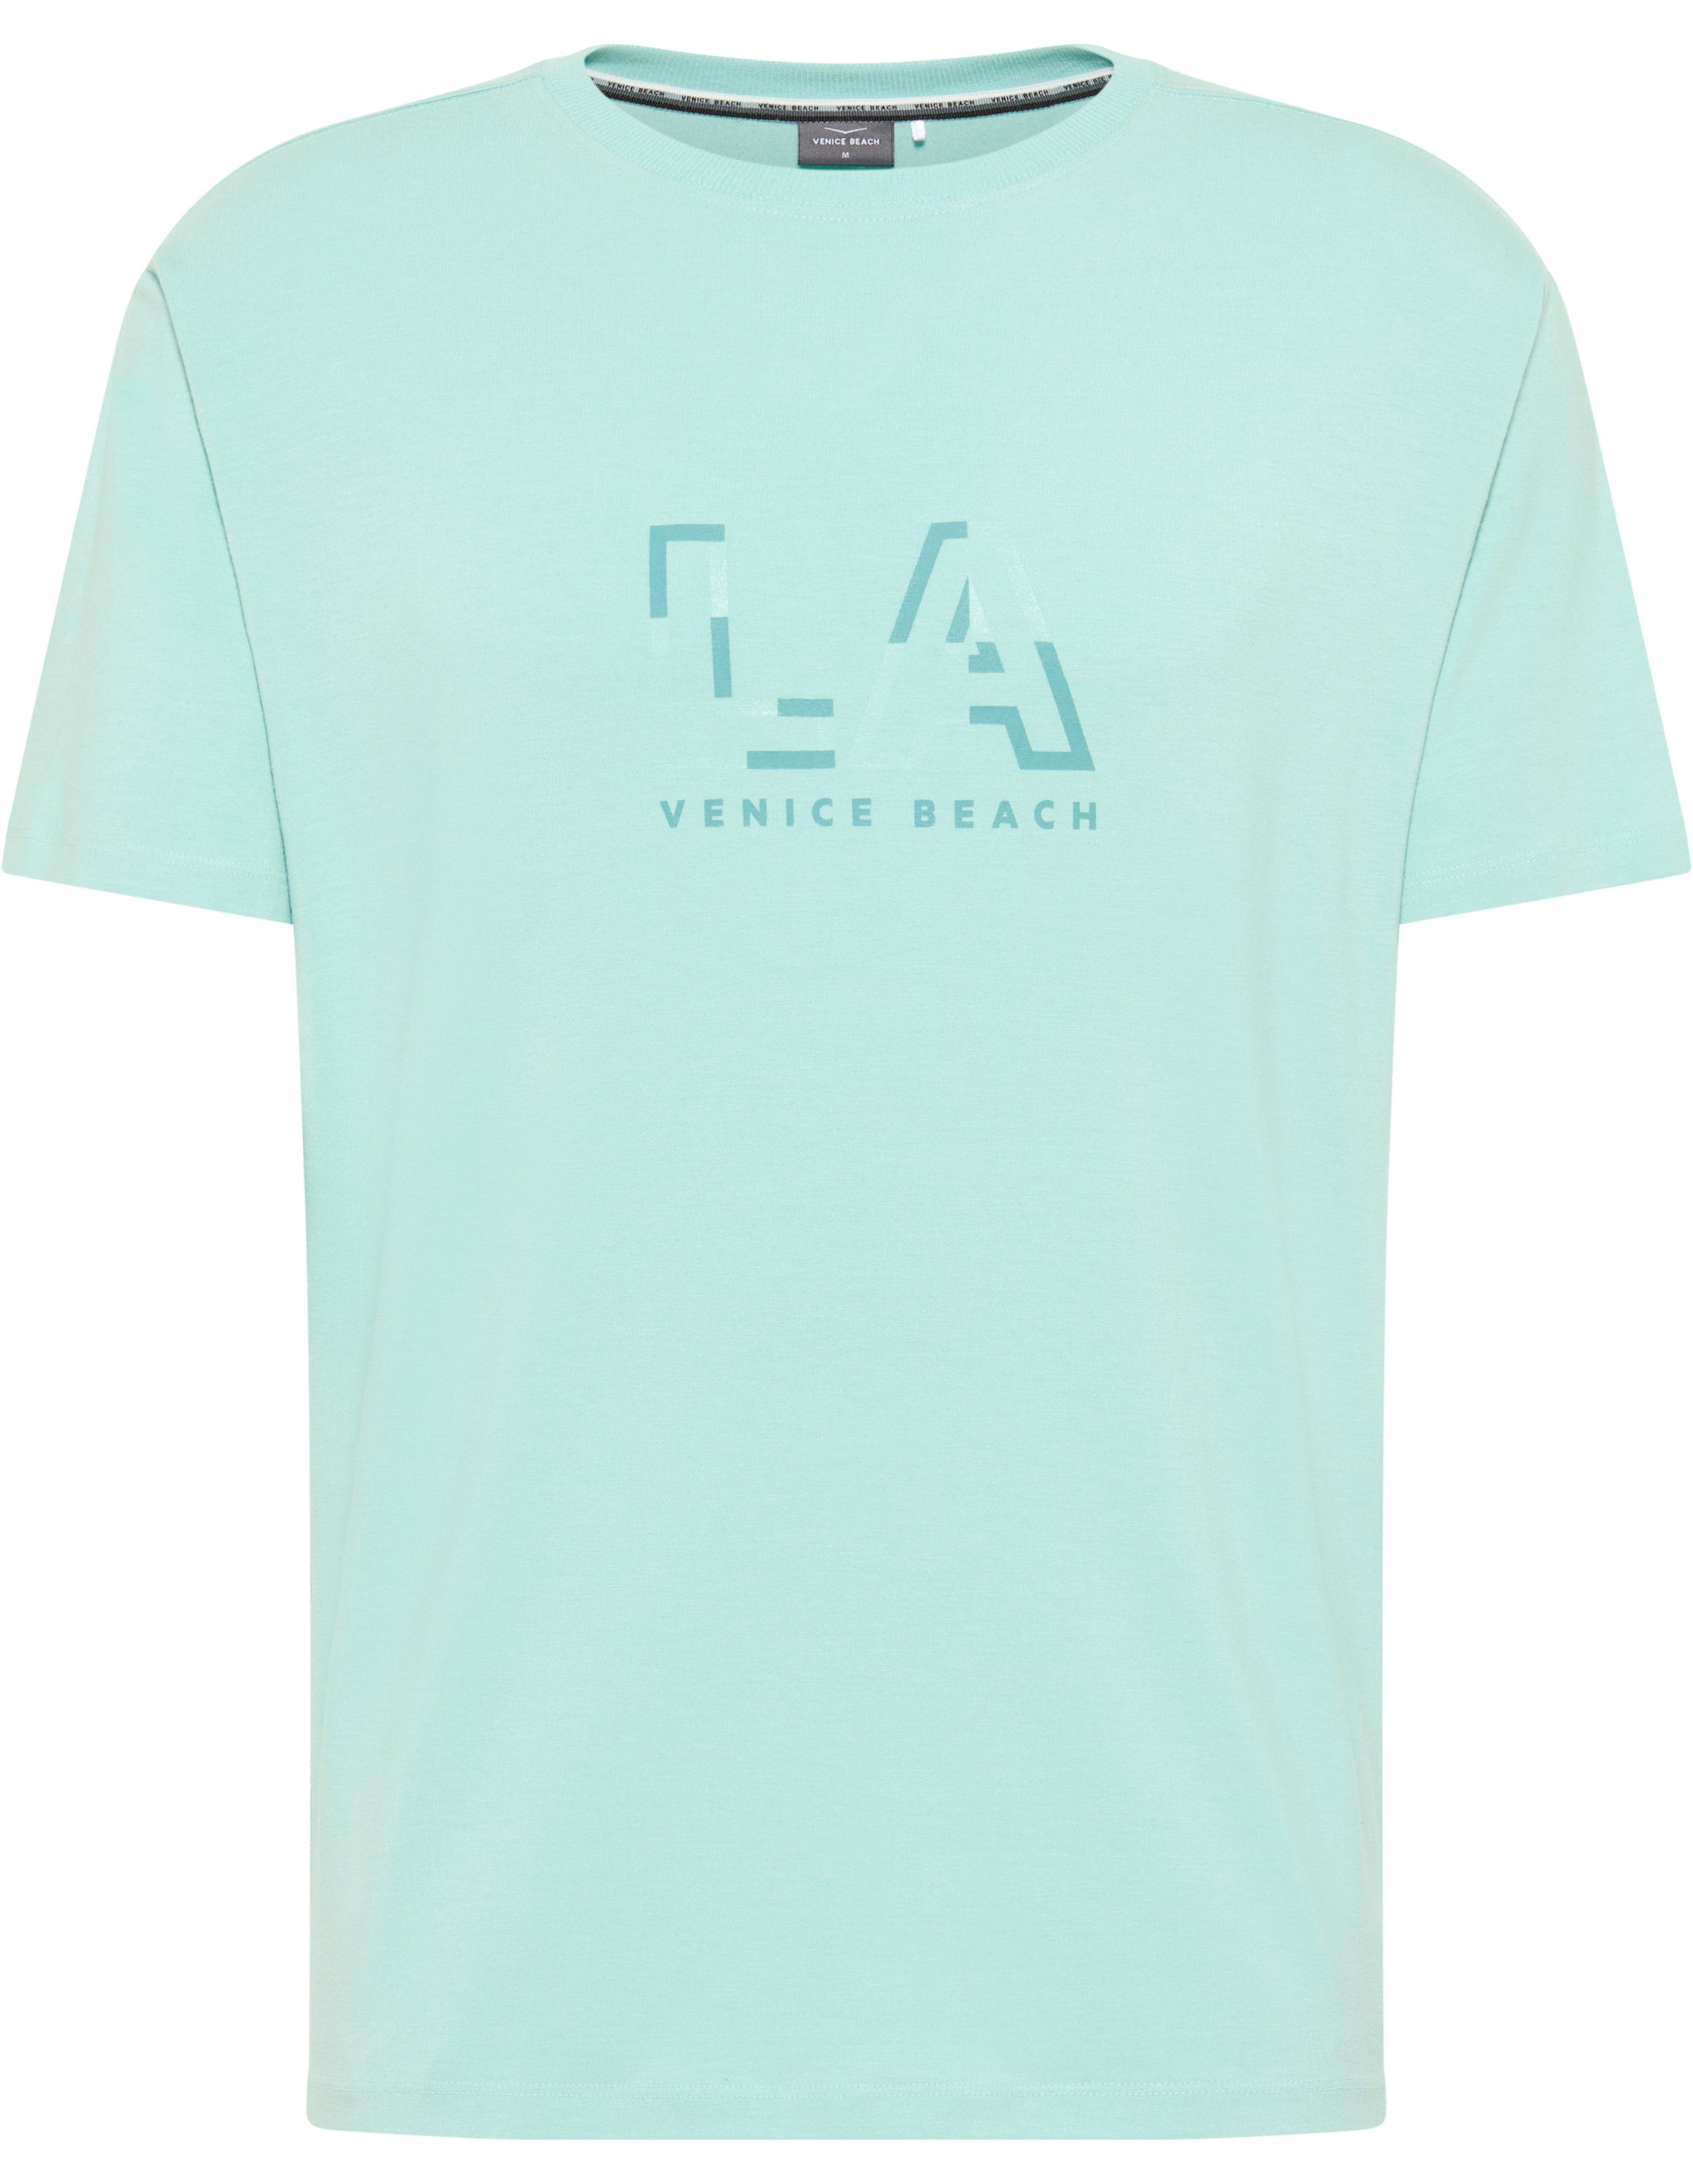 Venice Beach Men aqua VB BRETT haze T-Shirt T-Shirt